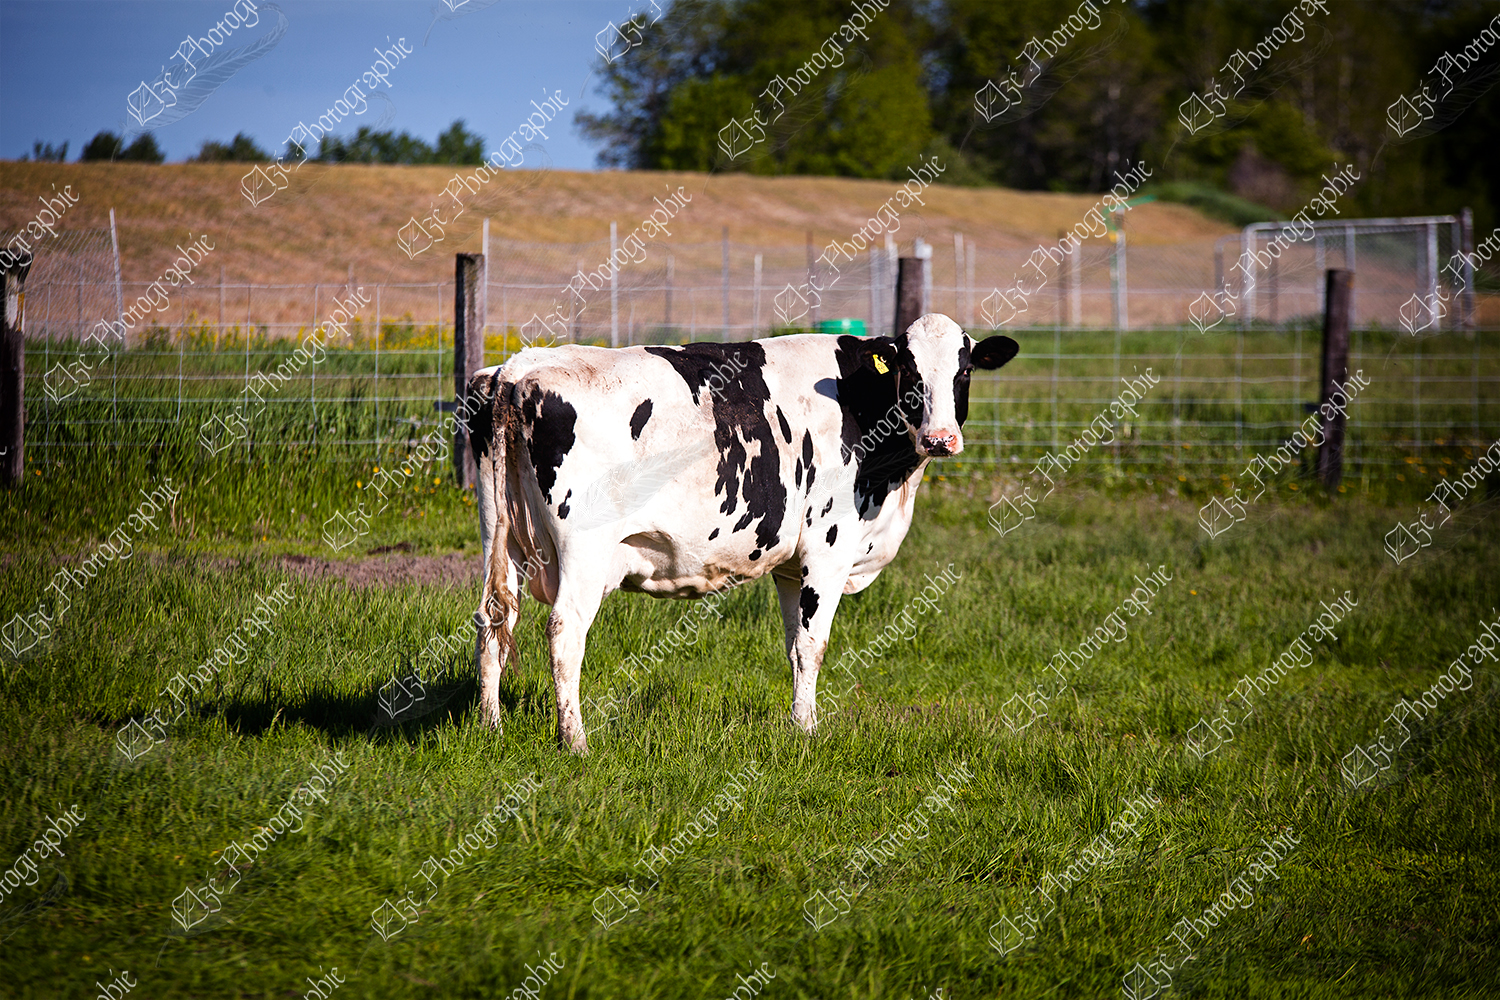 elze_photo_1248_vache_prairie_repos_dairy_cow_meadow